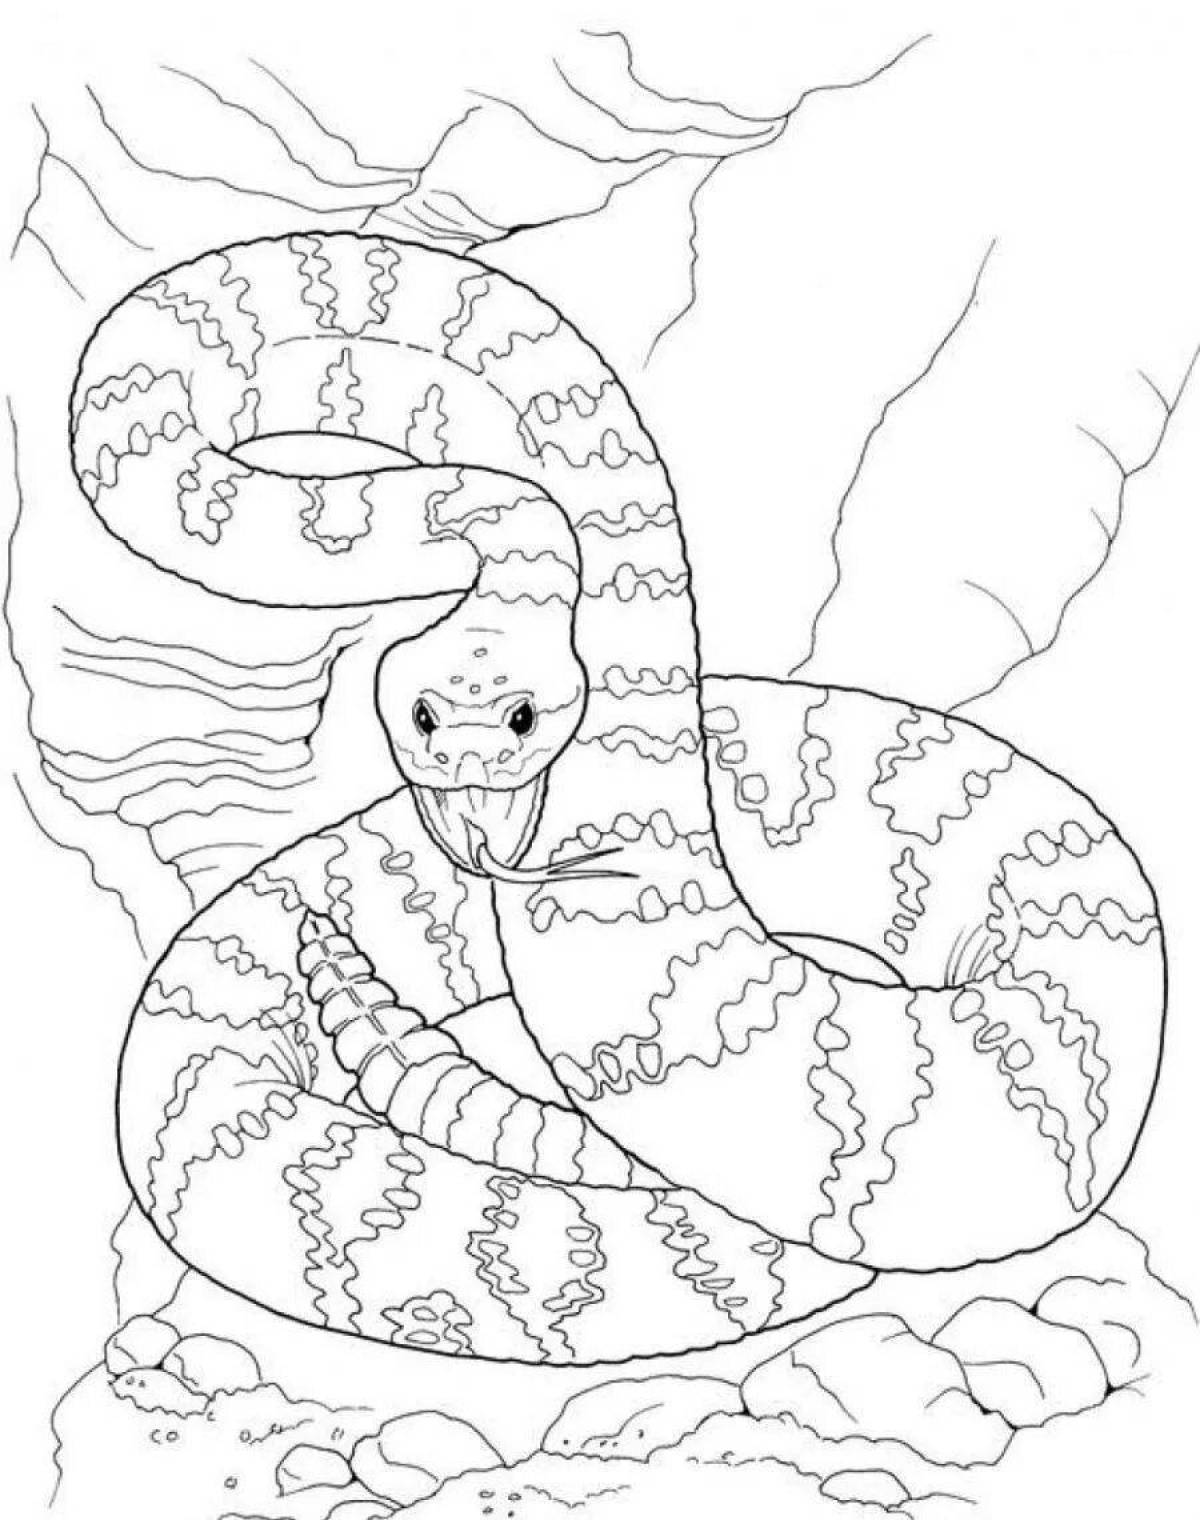 Wonderful snake coloring by numbers